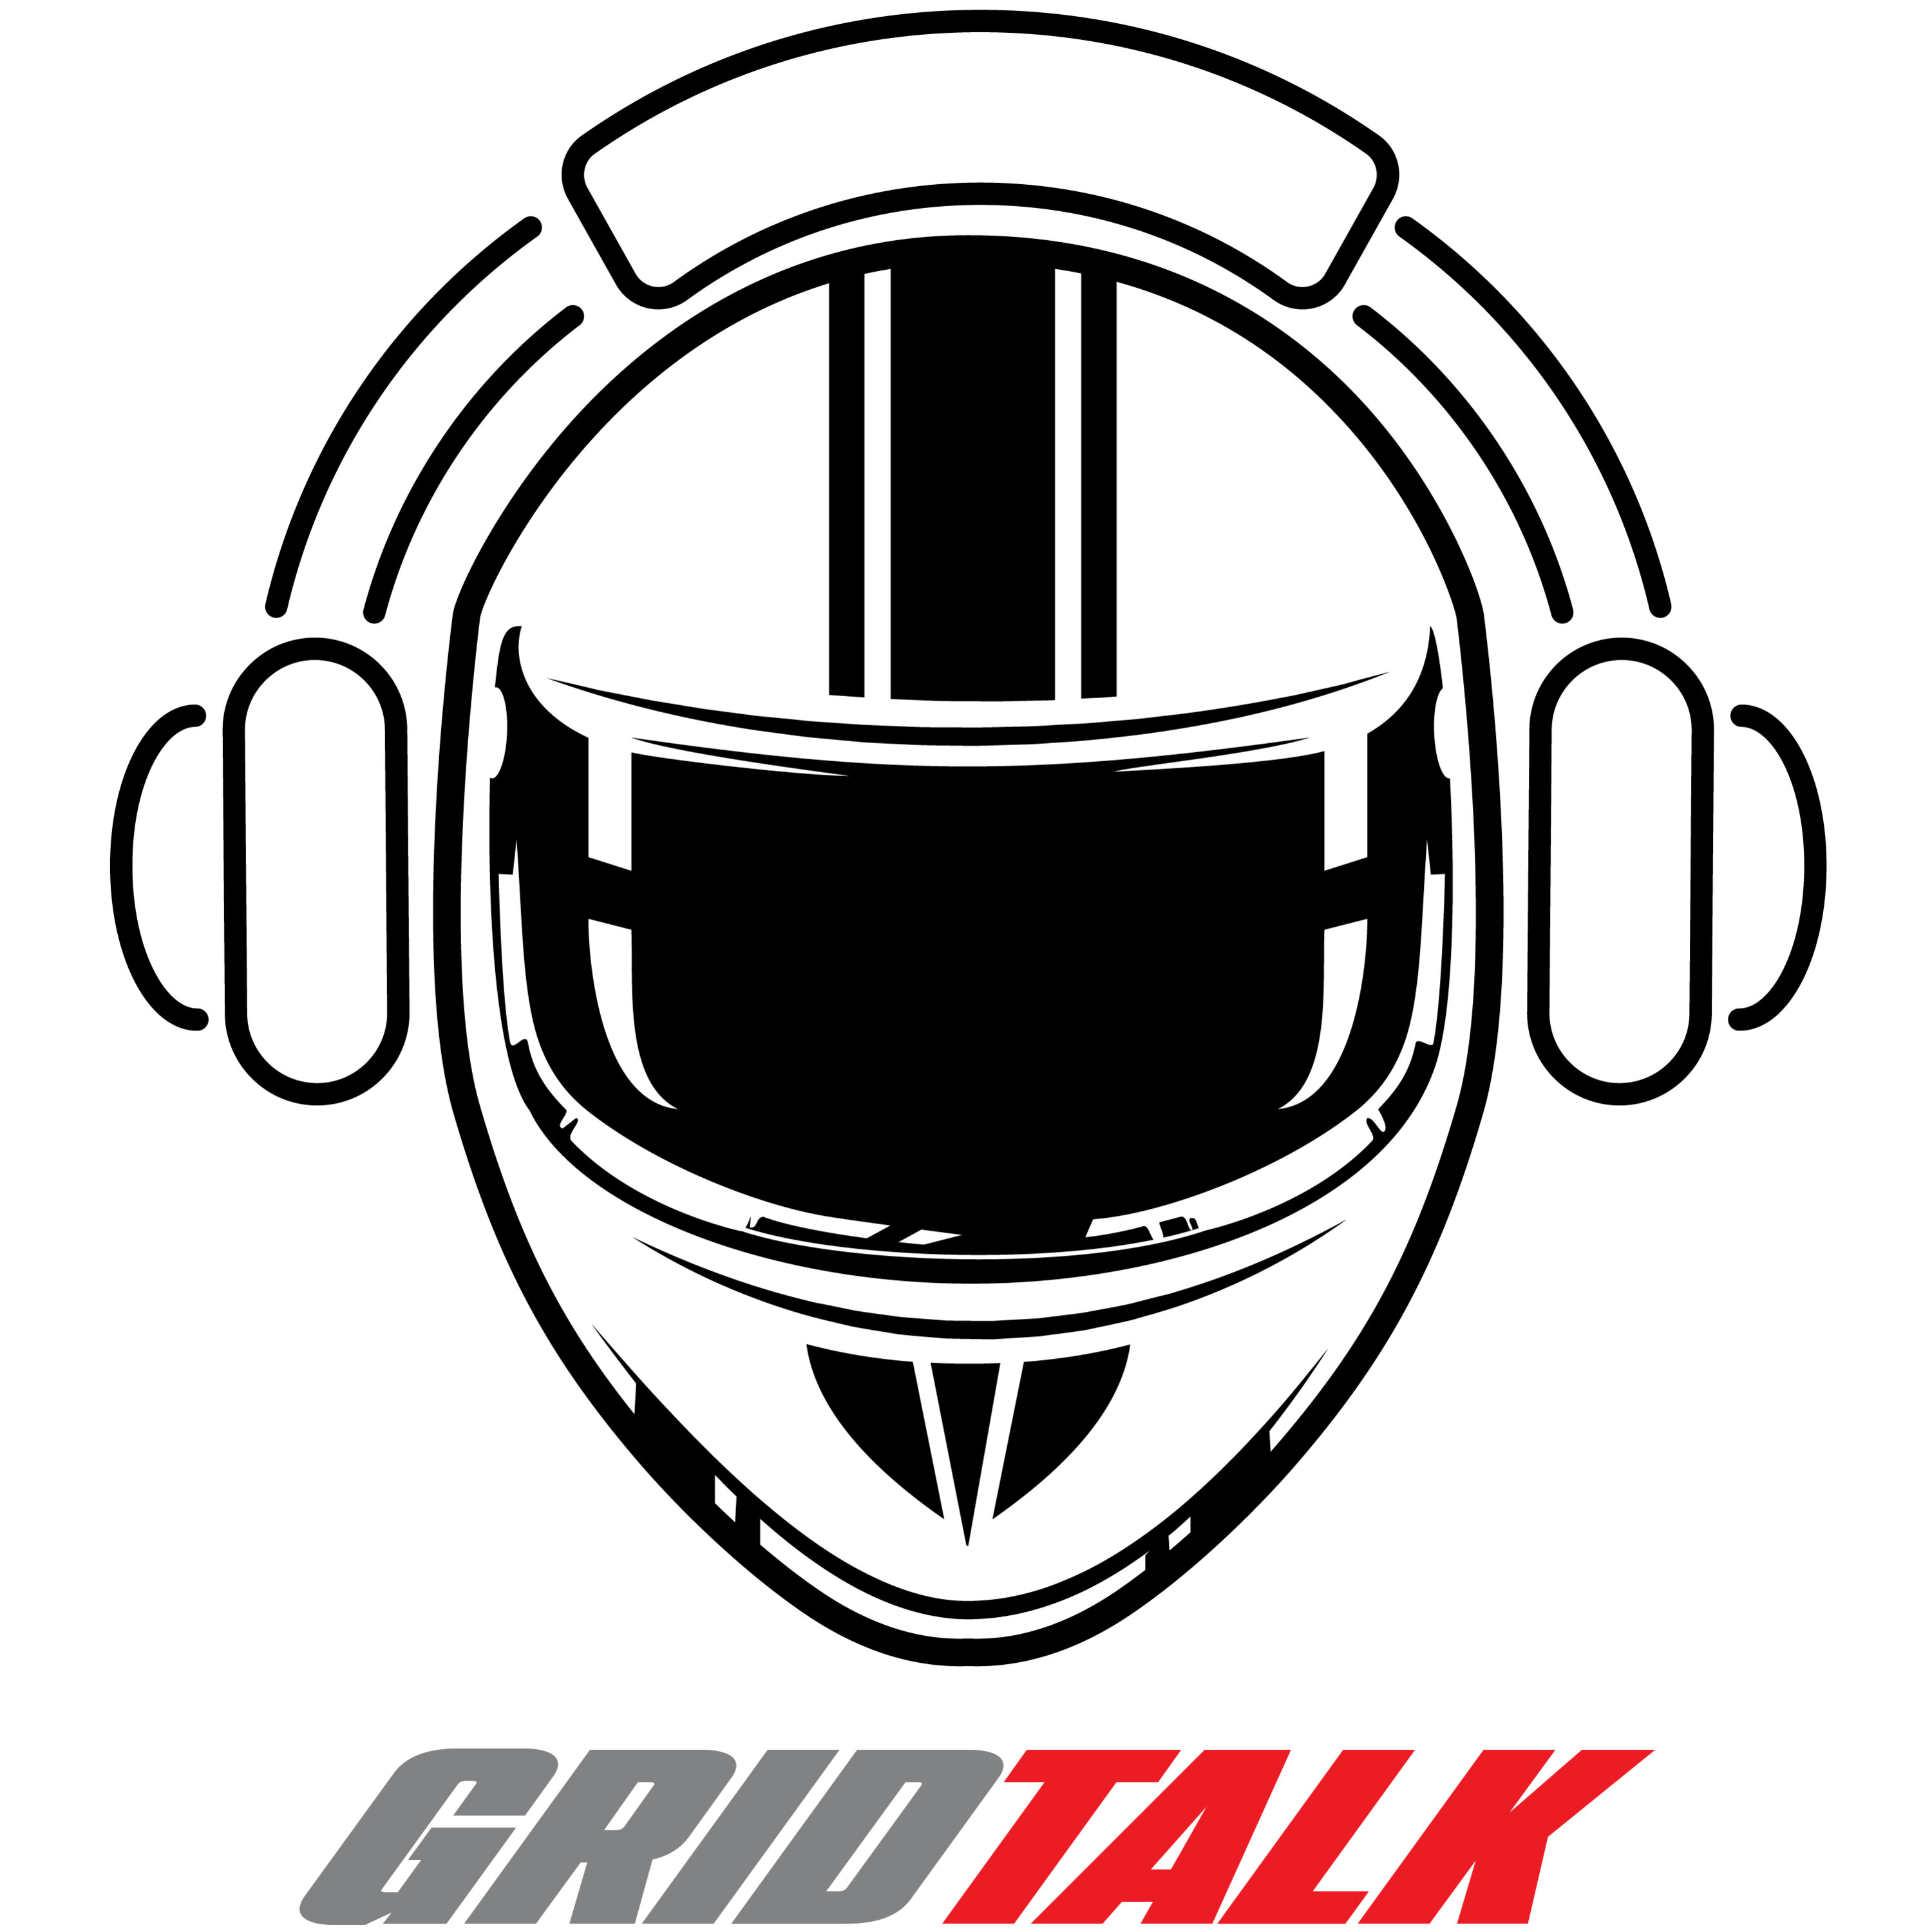 Formula 1 Grid Talk Podcast